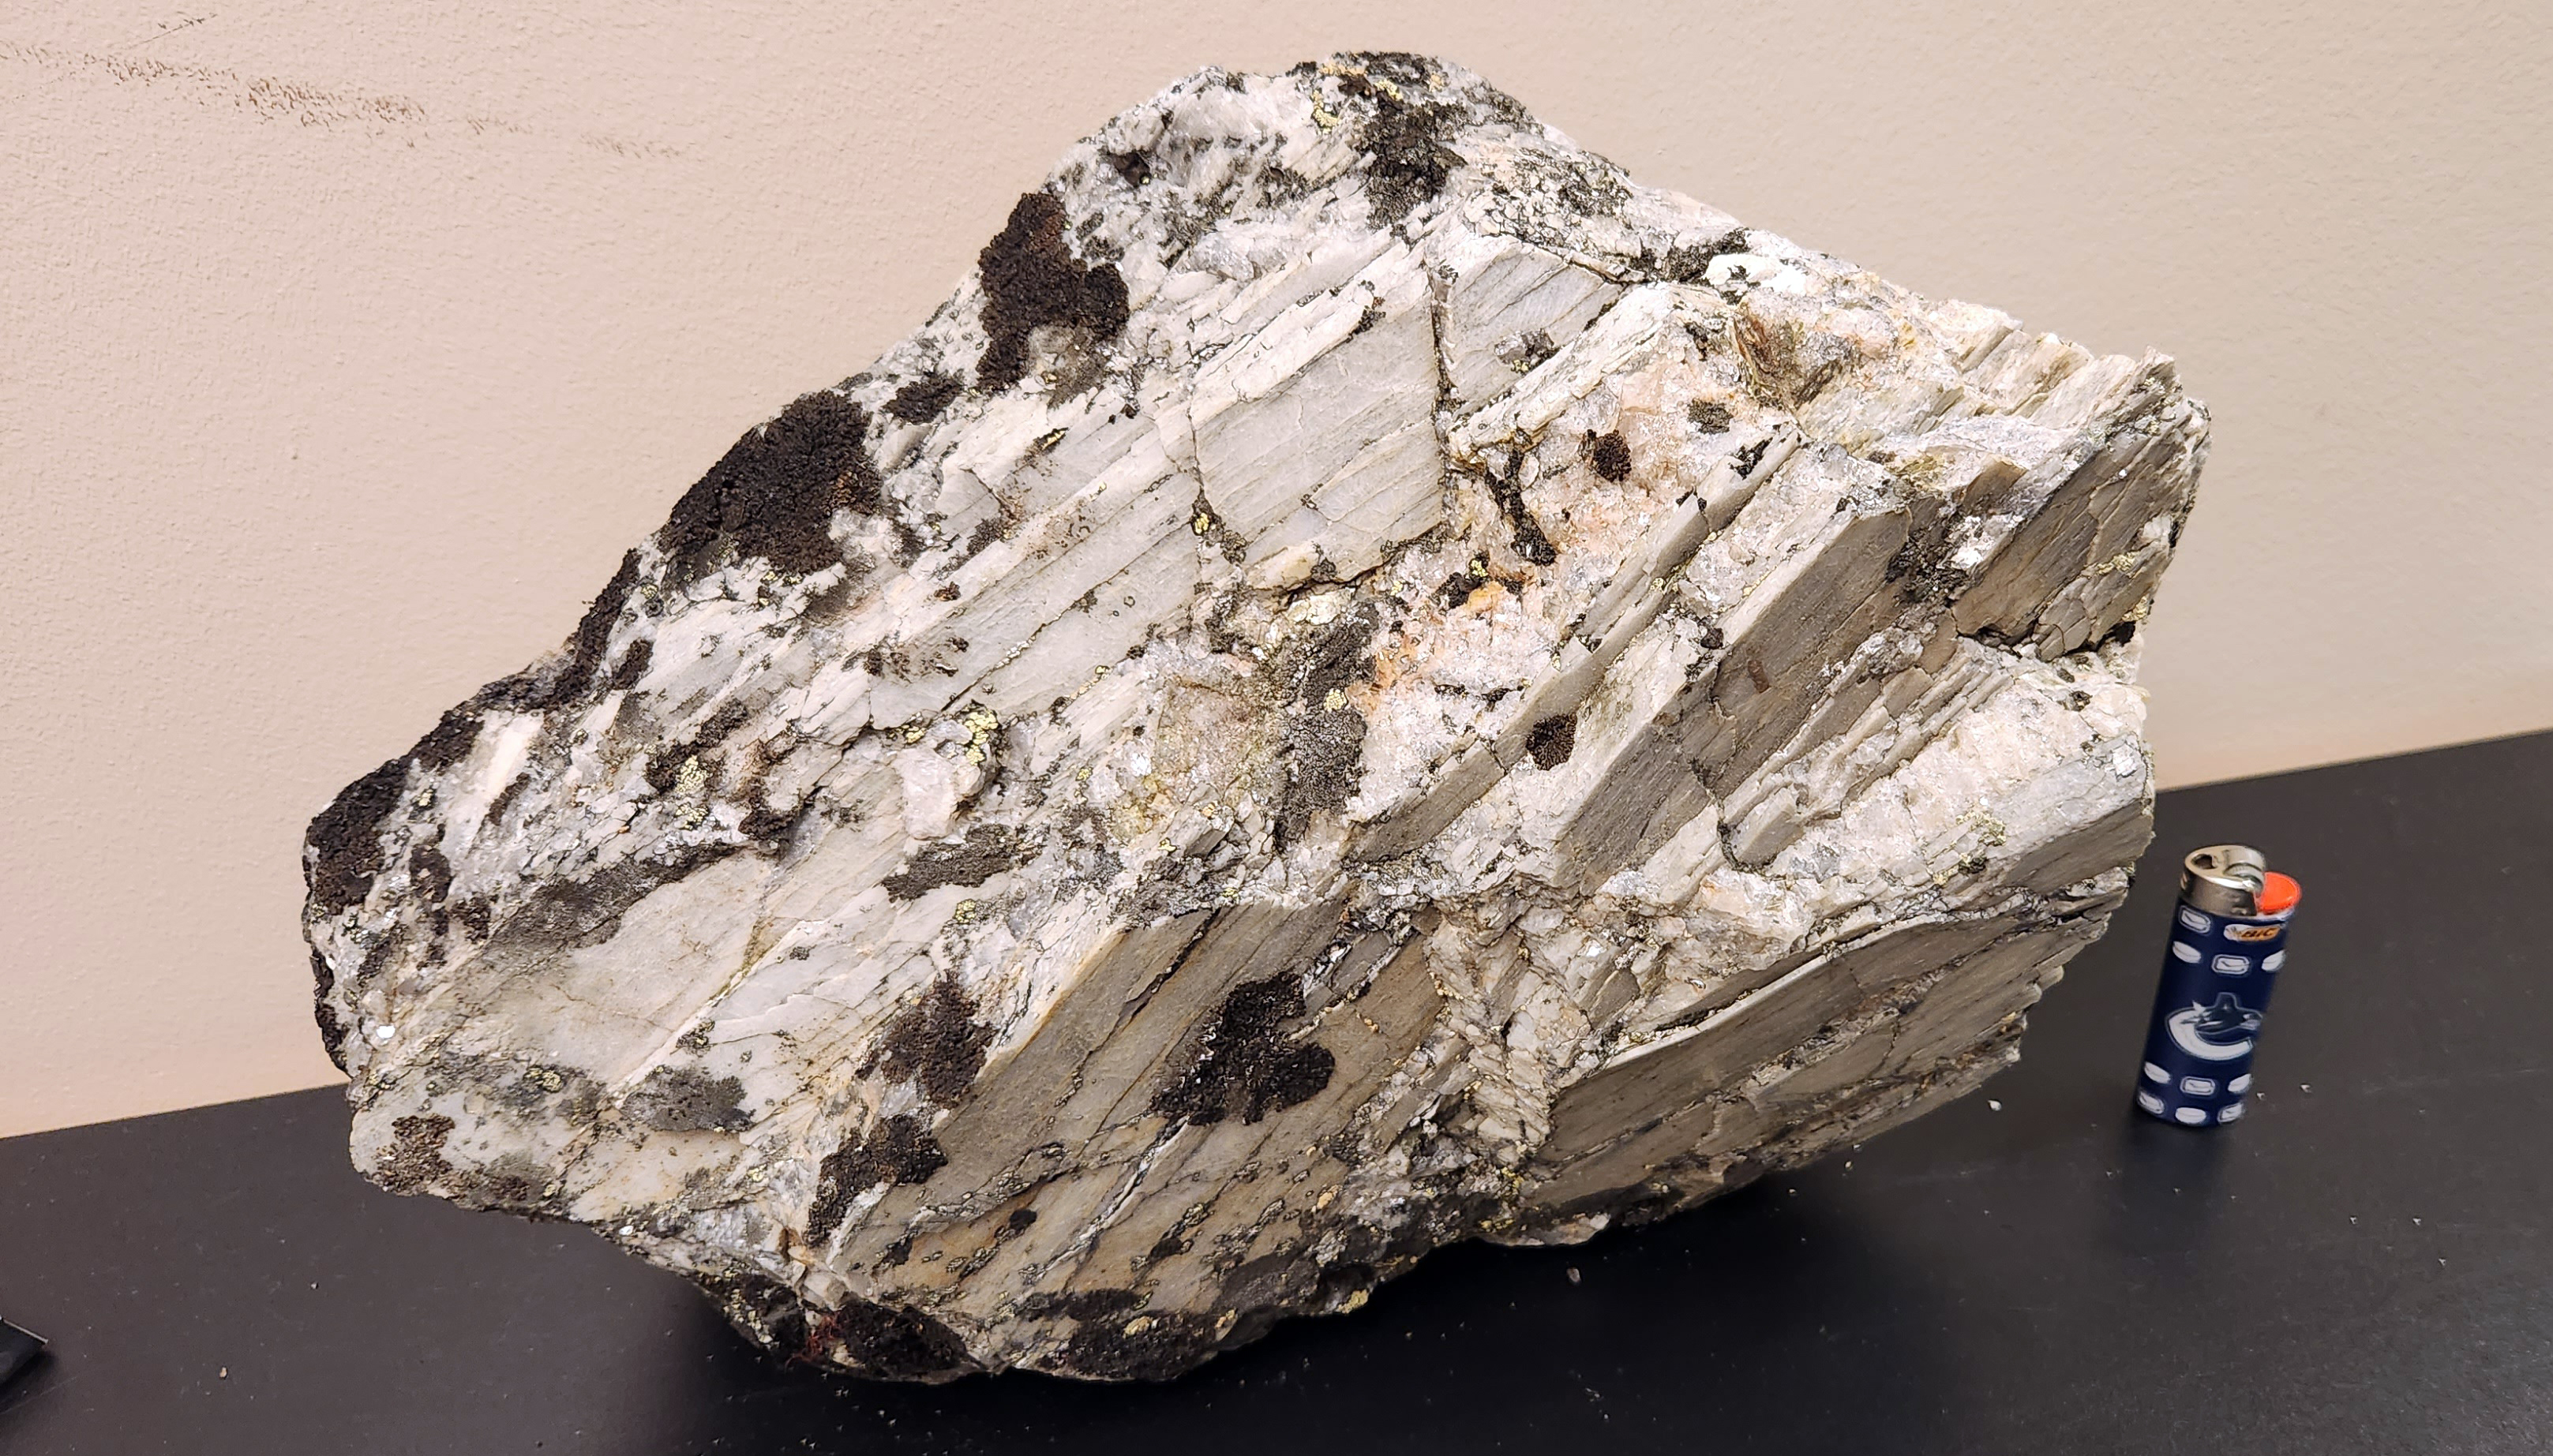 Megacrystic spodumene boulder from the SD4 Pegmatite